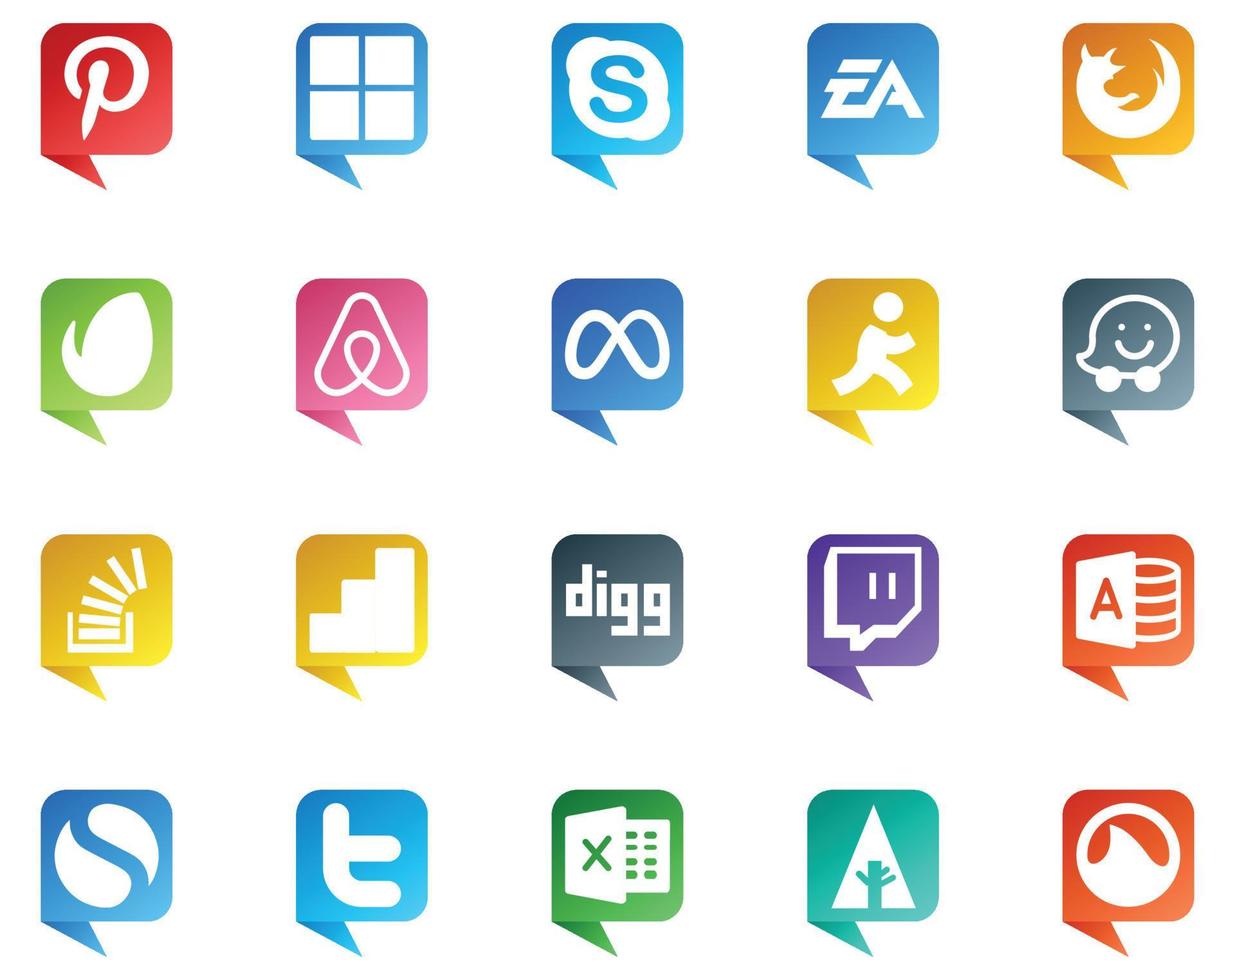 20 logotipo de estilo de burbuja de discurso de redes sociales como stock stockoverflow browser waze facebook vector